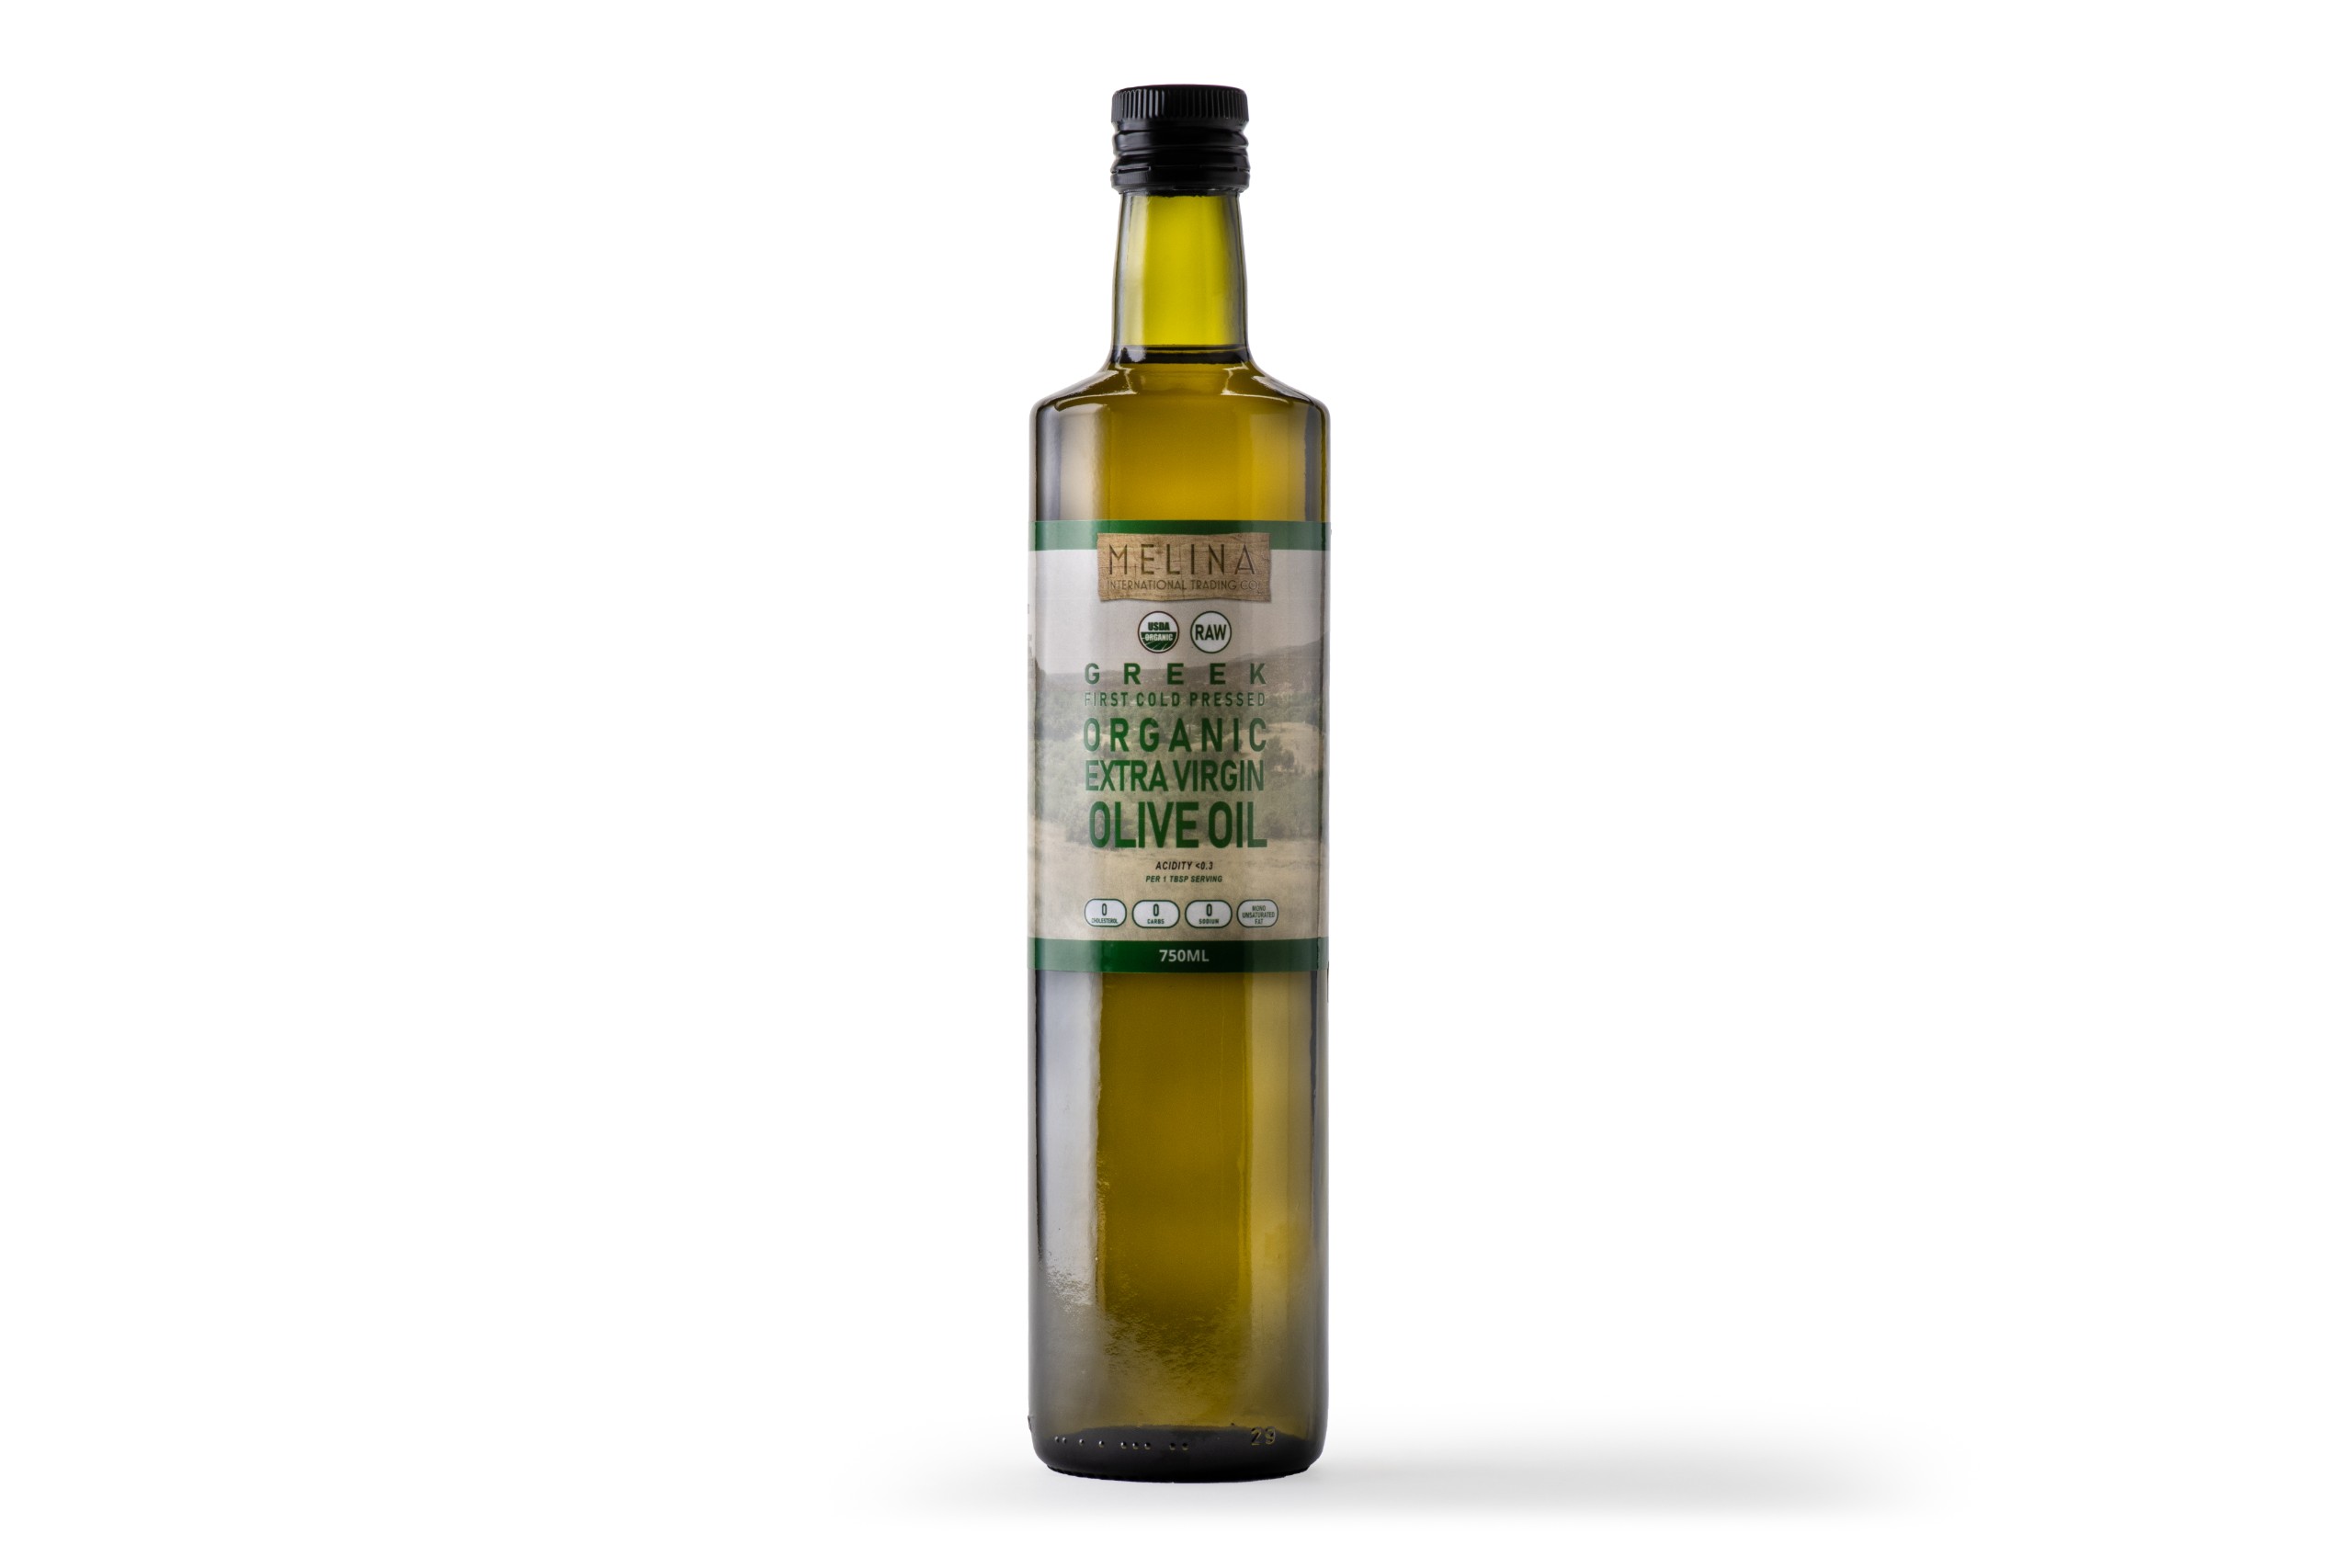 Olive Oil-Extra Virgin